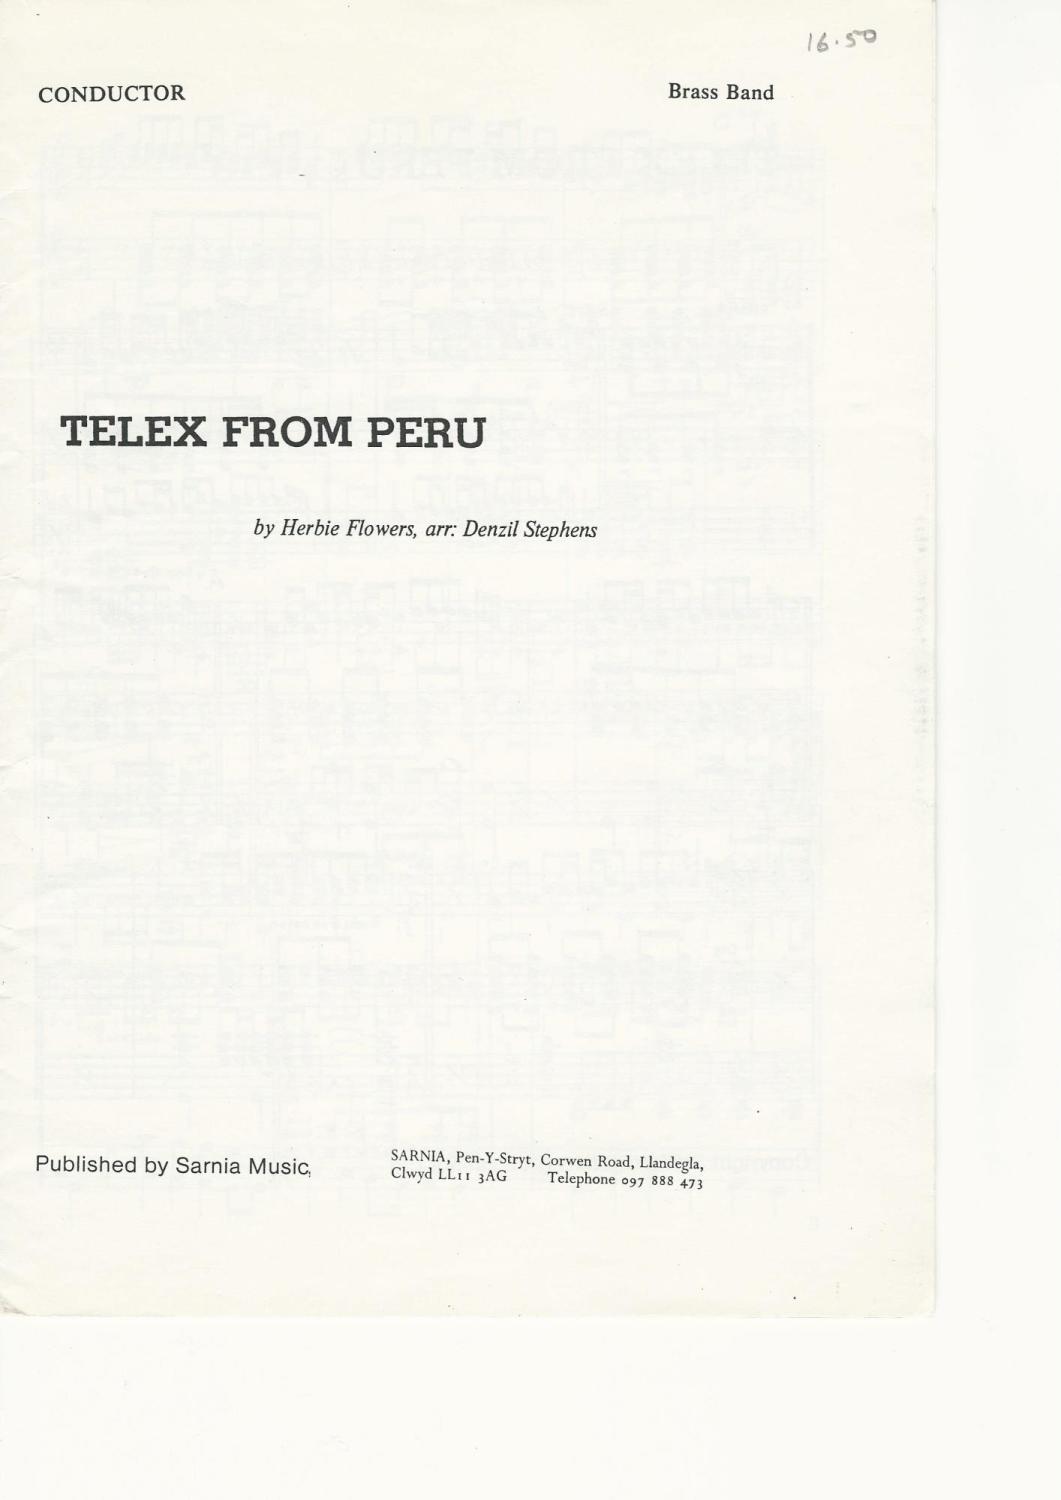 Telex from Peru for Brass Band - Herbie Flowers, arr. Denzil Stephens